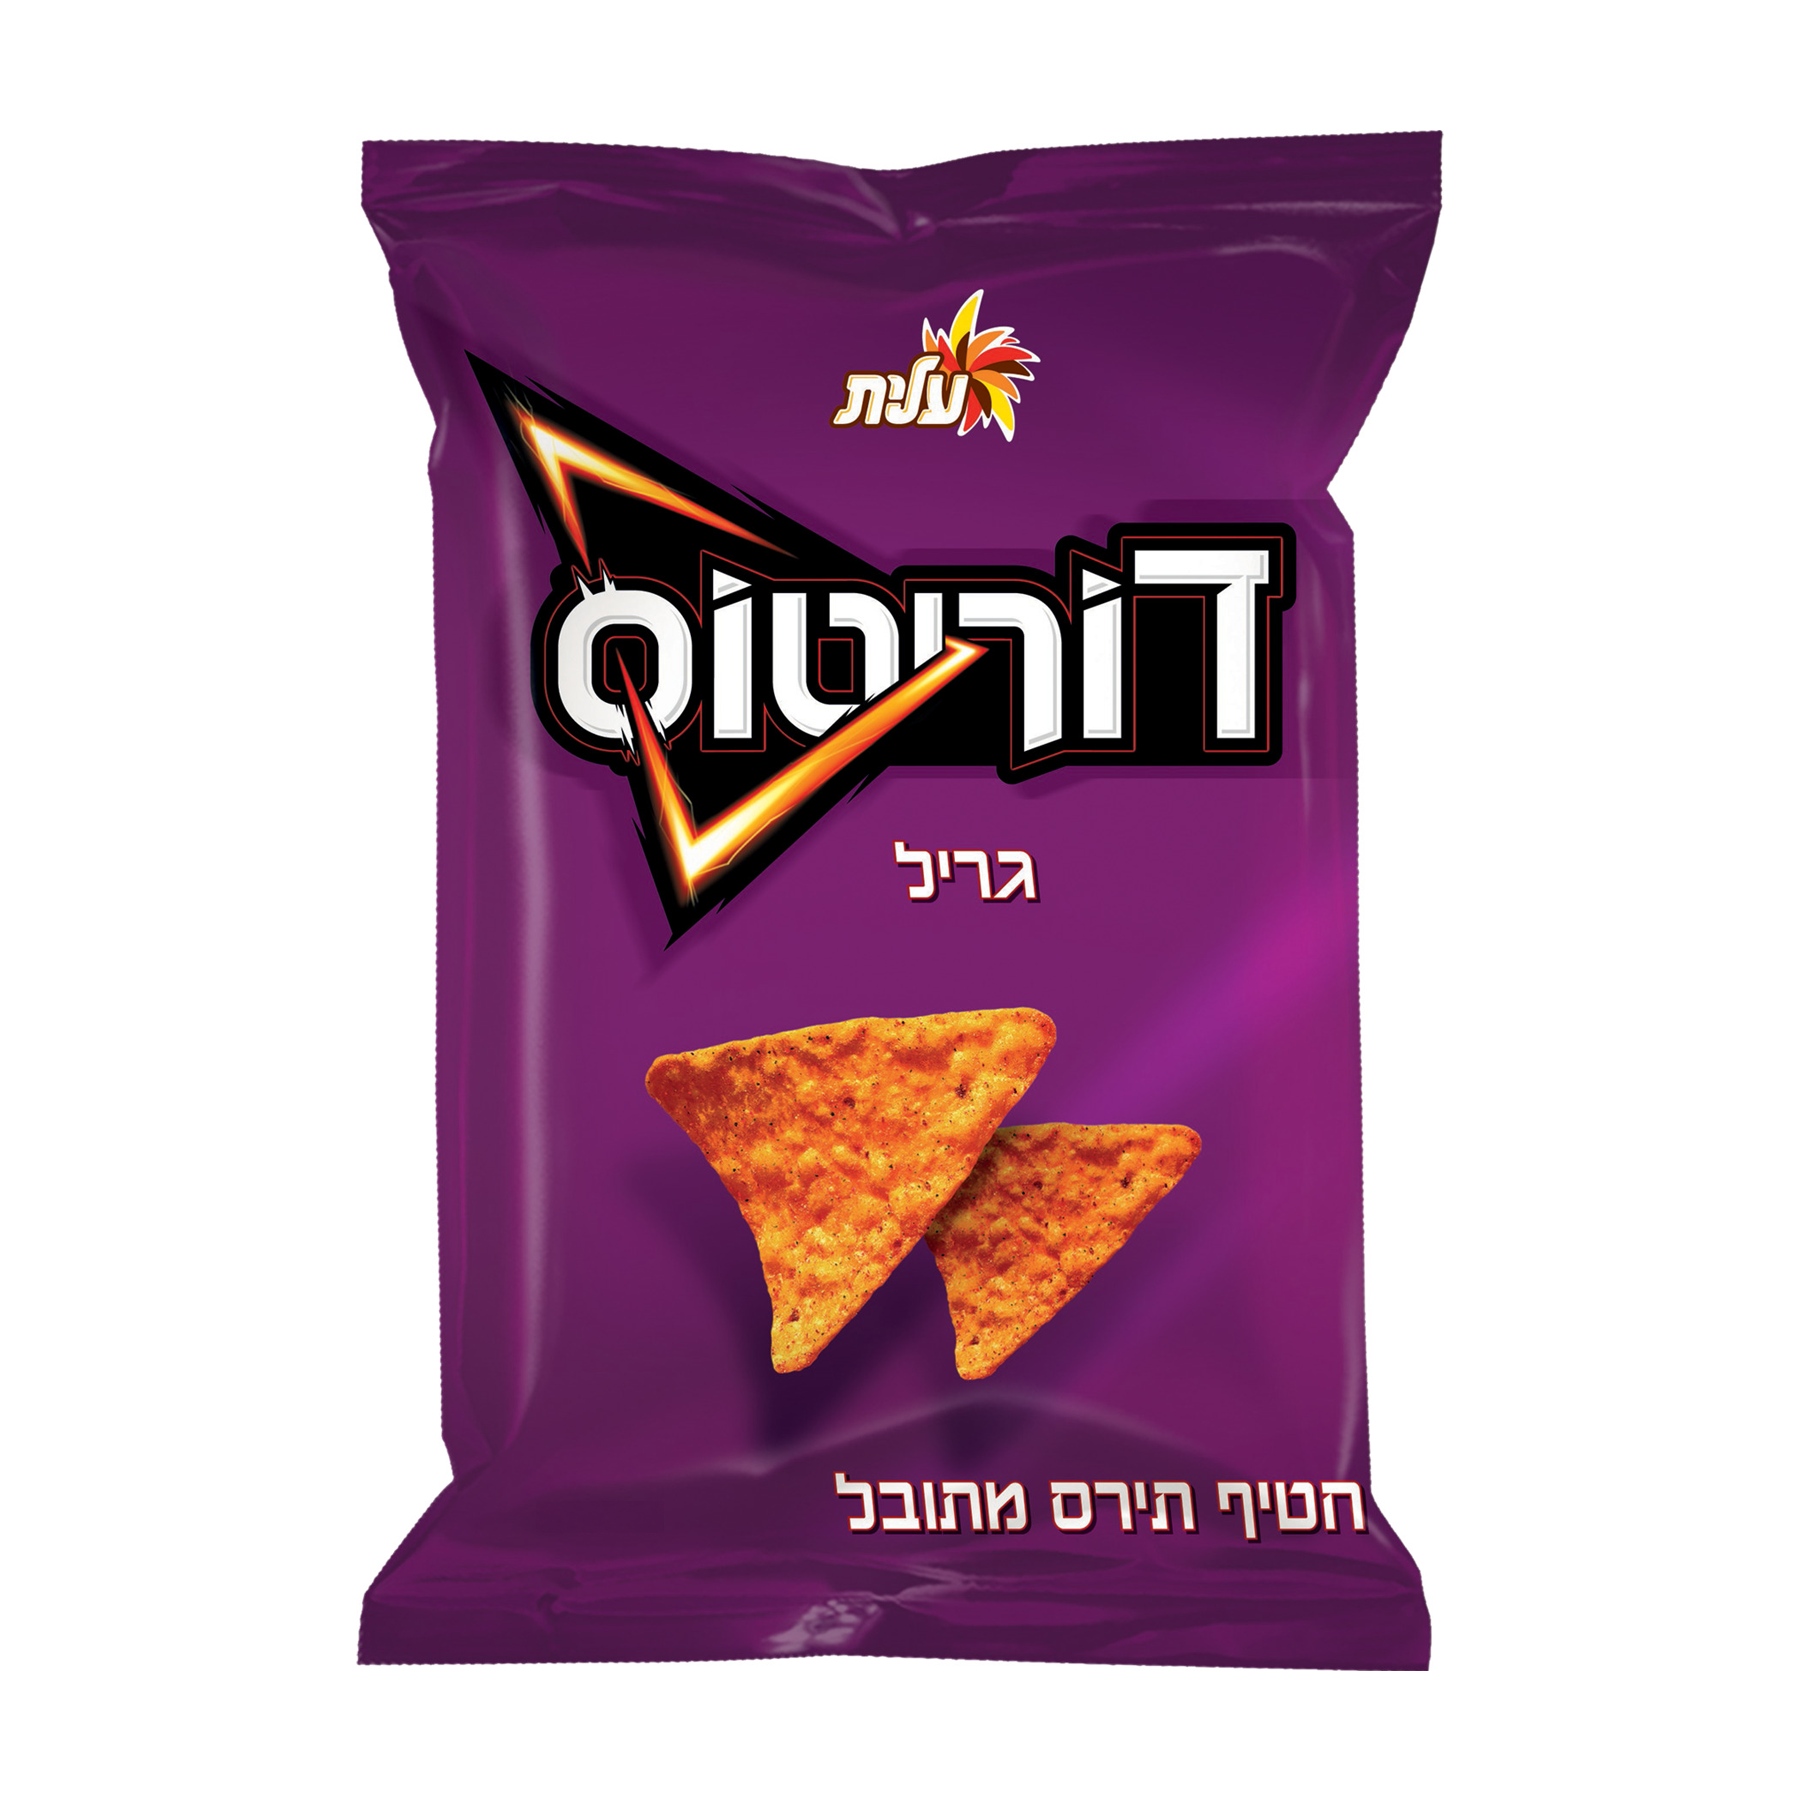 Doritos Bbq Flavored Chips